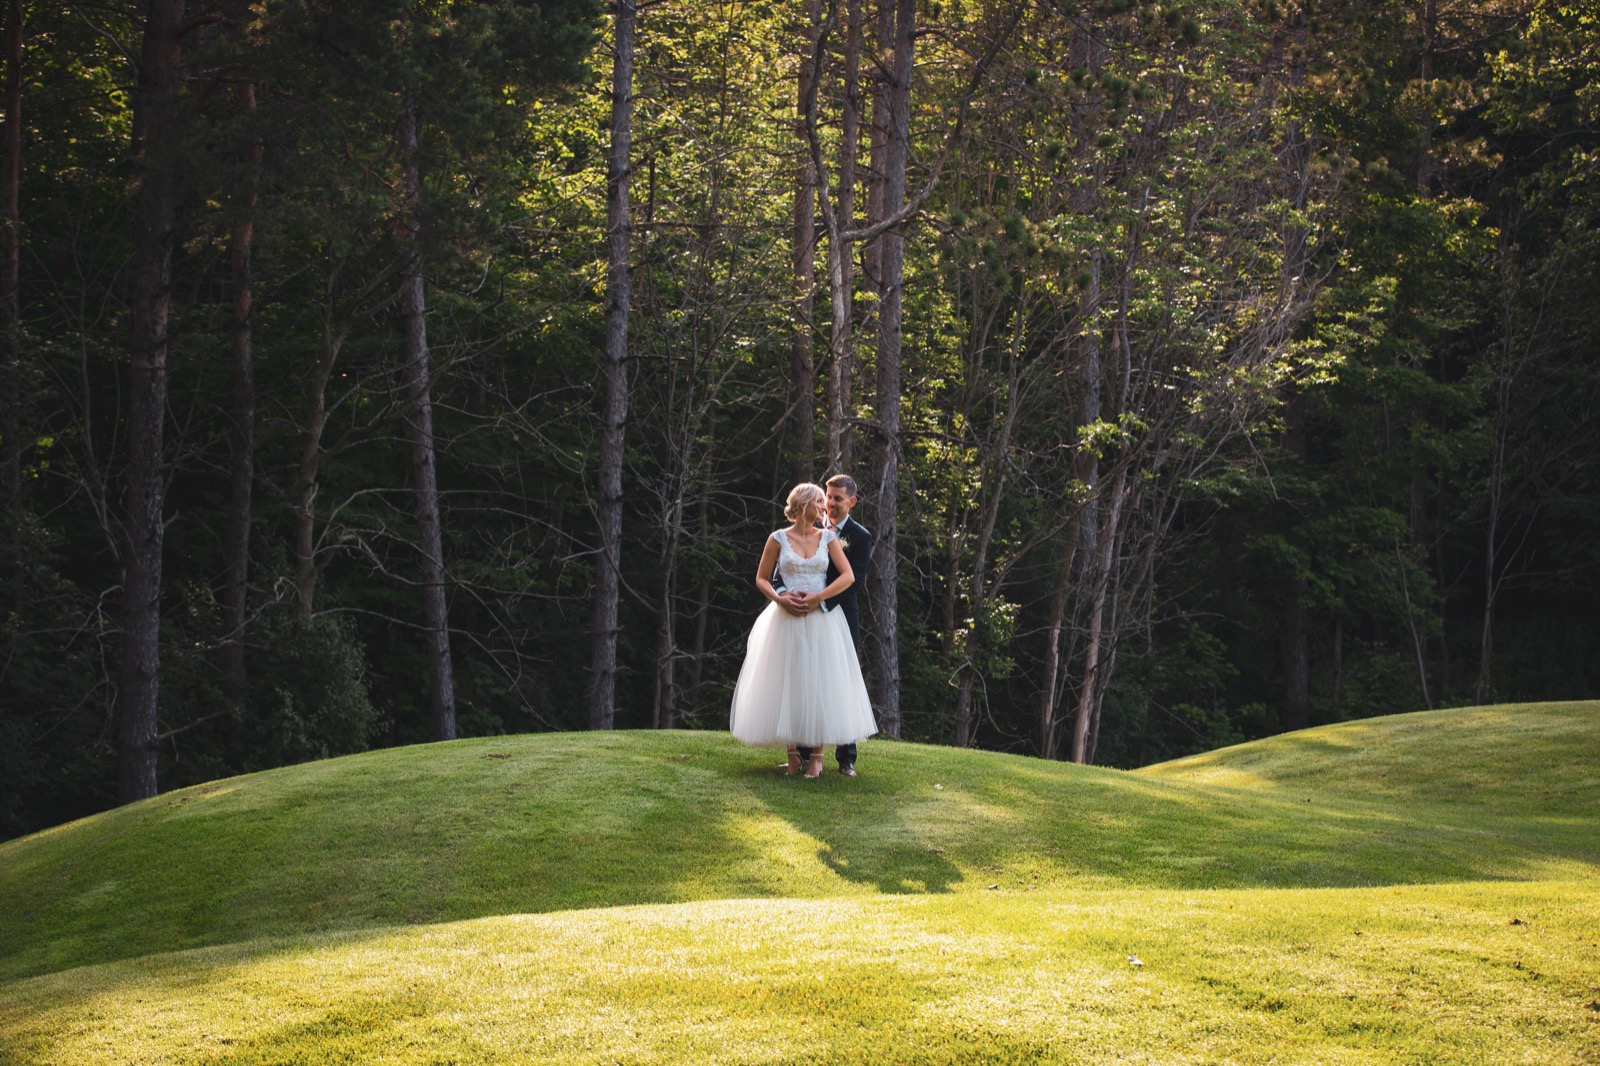 Summer Wedding Magic at Wooden Sticks Golf Club: Cassy & Julian's Intimate Celebration